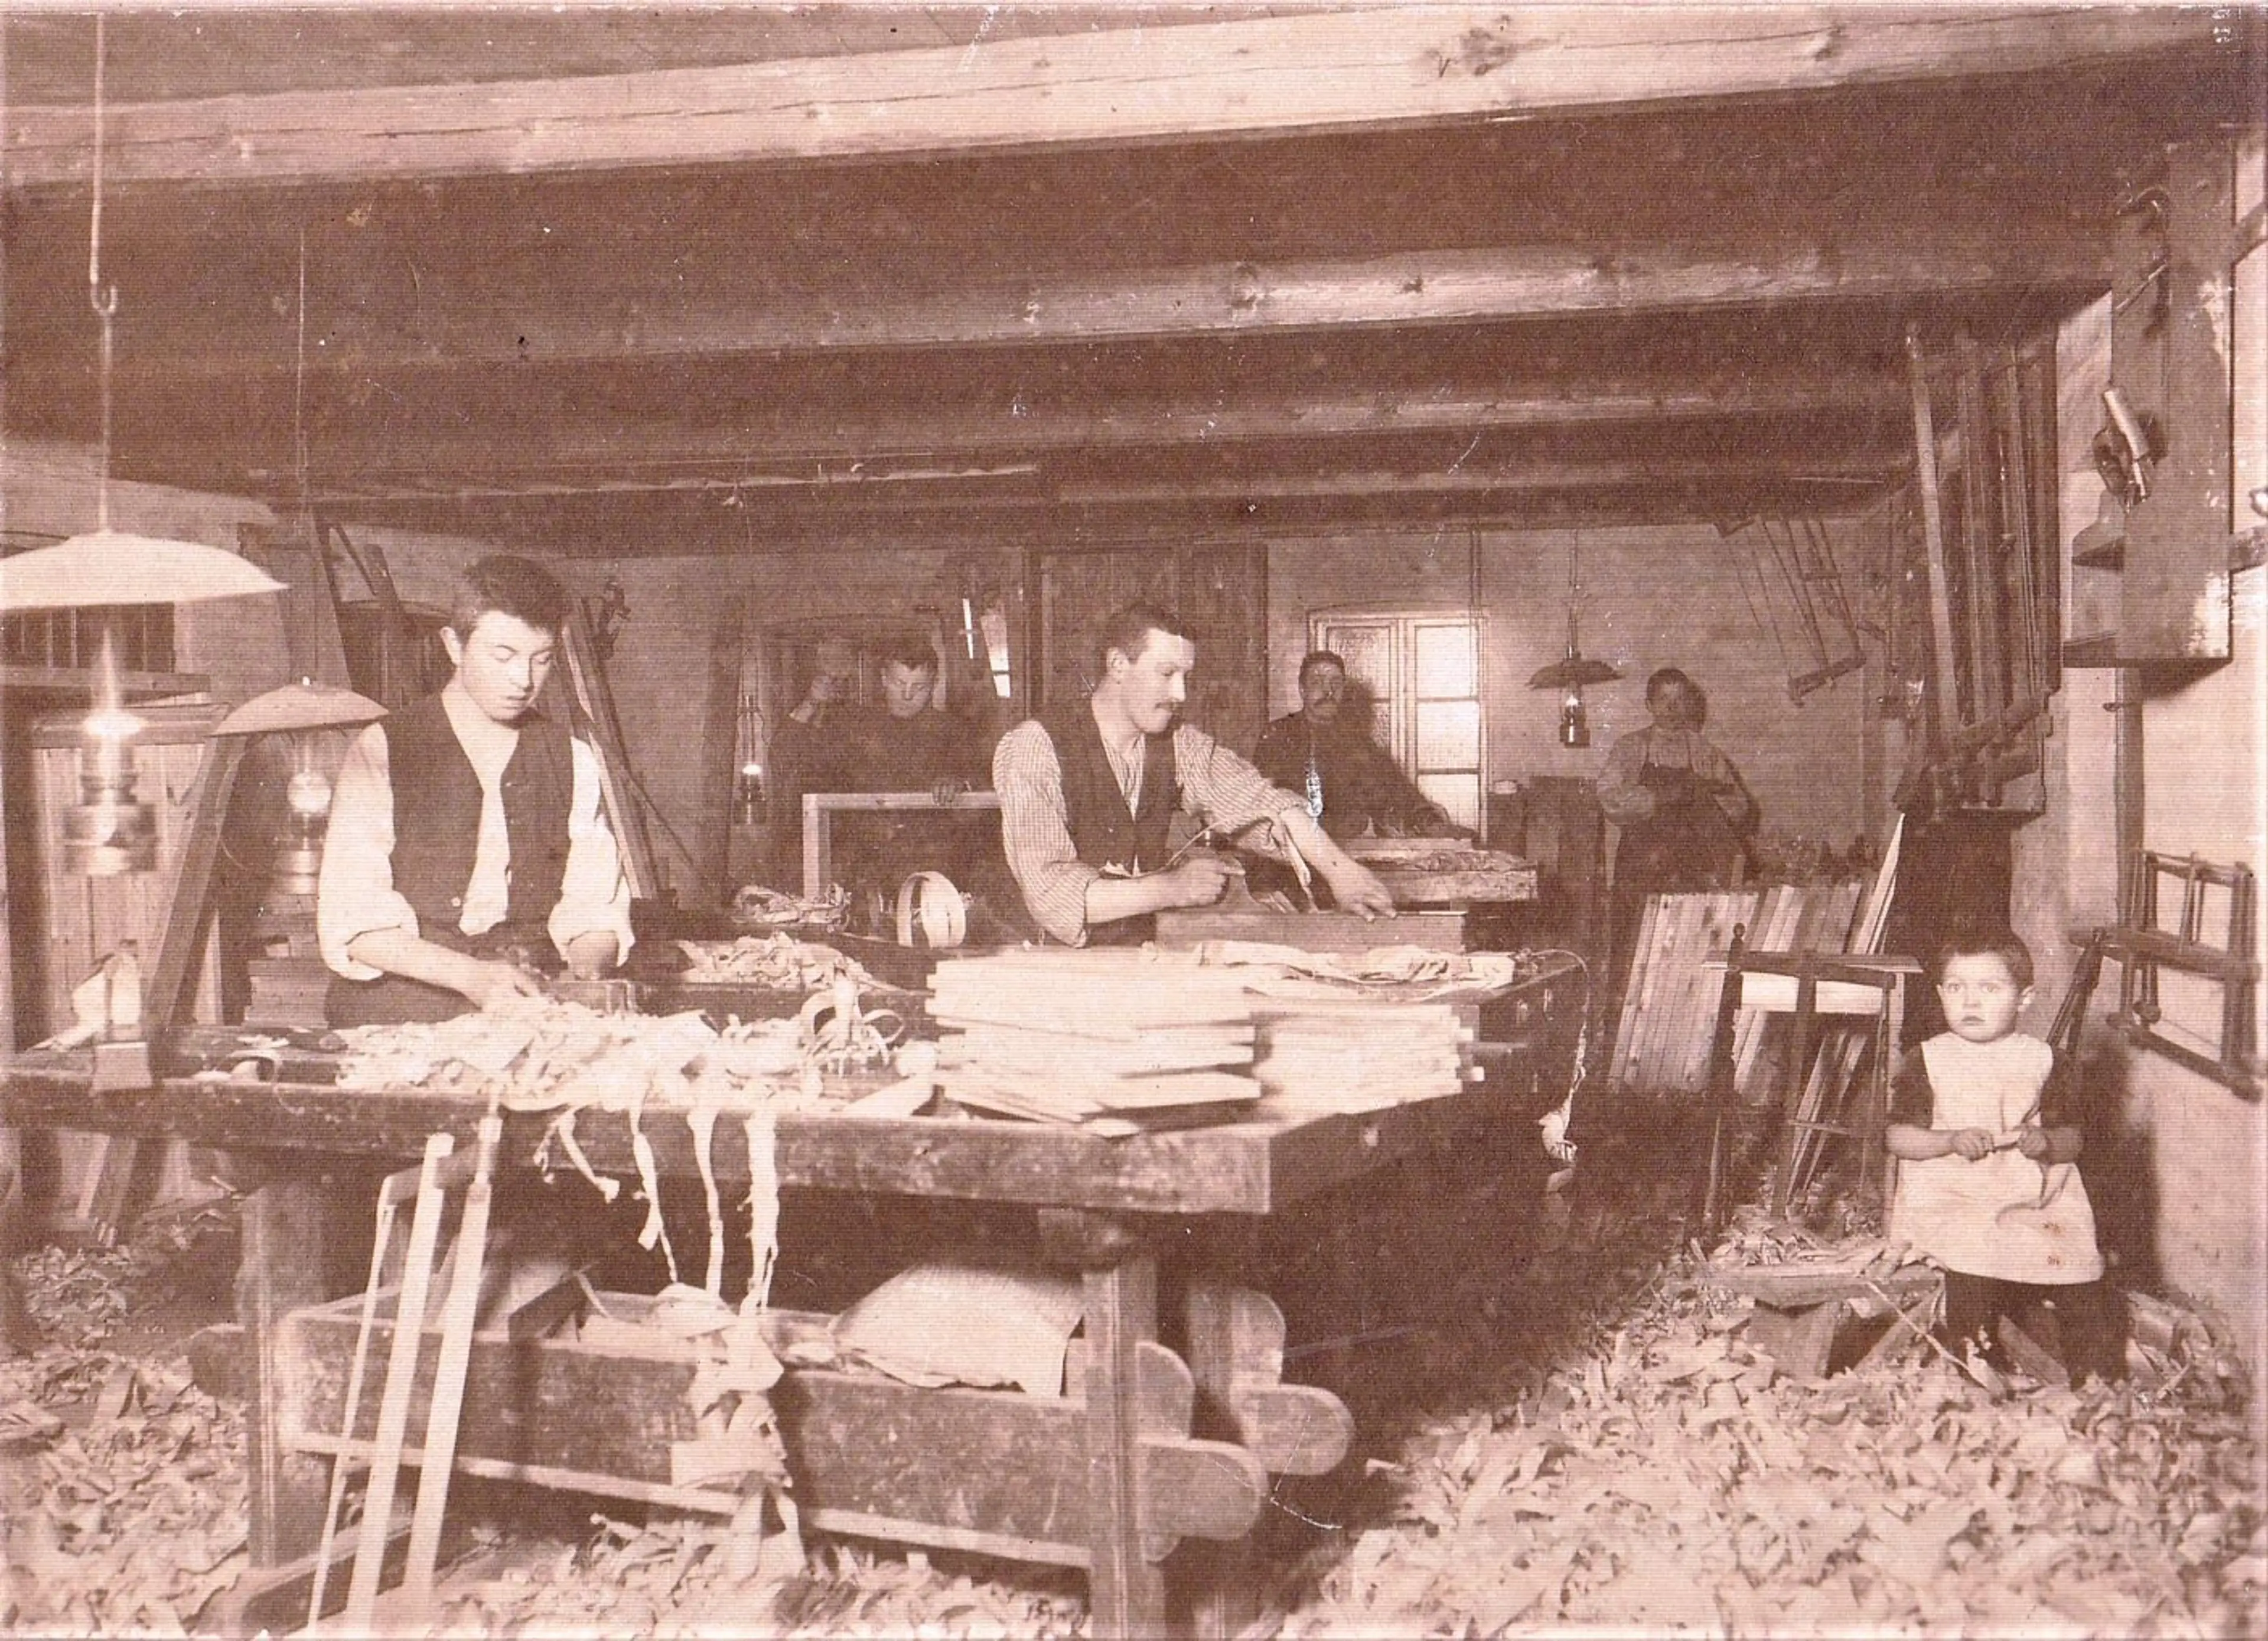 Ole Kirk working in his brothers workshop